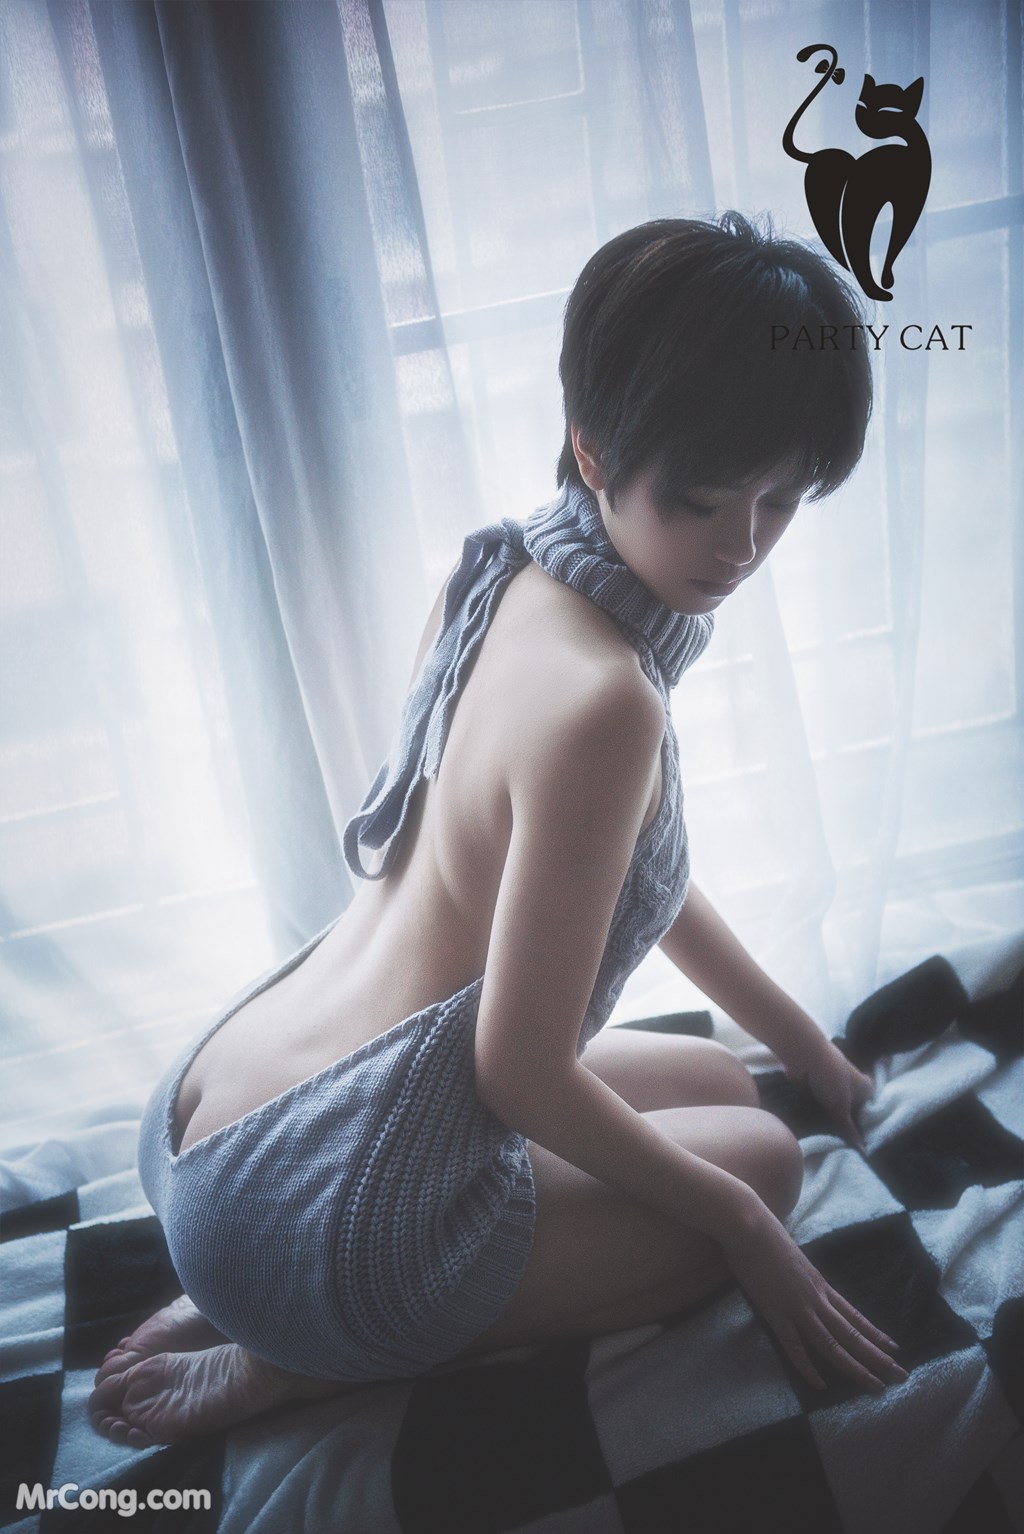 PartyCat Vol.019: Model Su Xiao Nuan (苏 小 暖) (62 pictures) photo 1-16